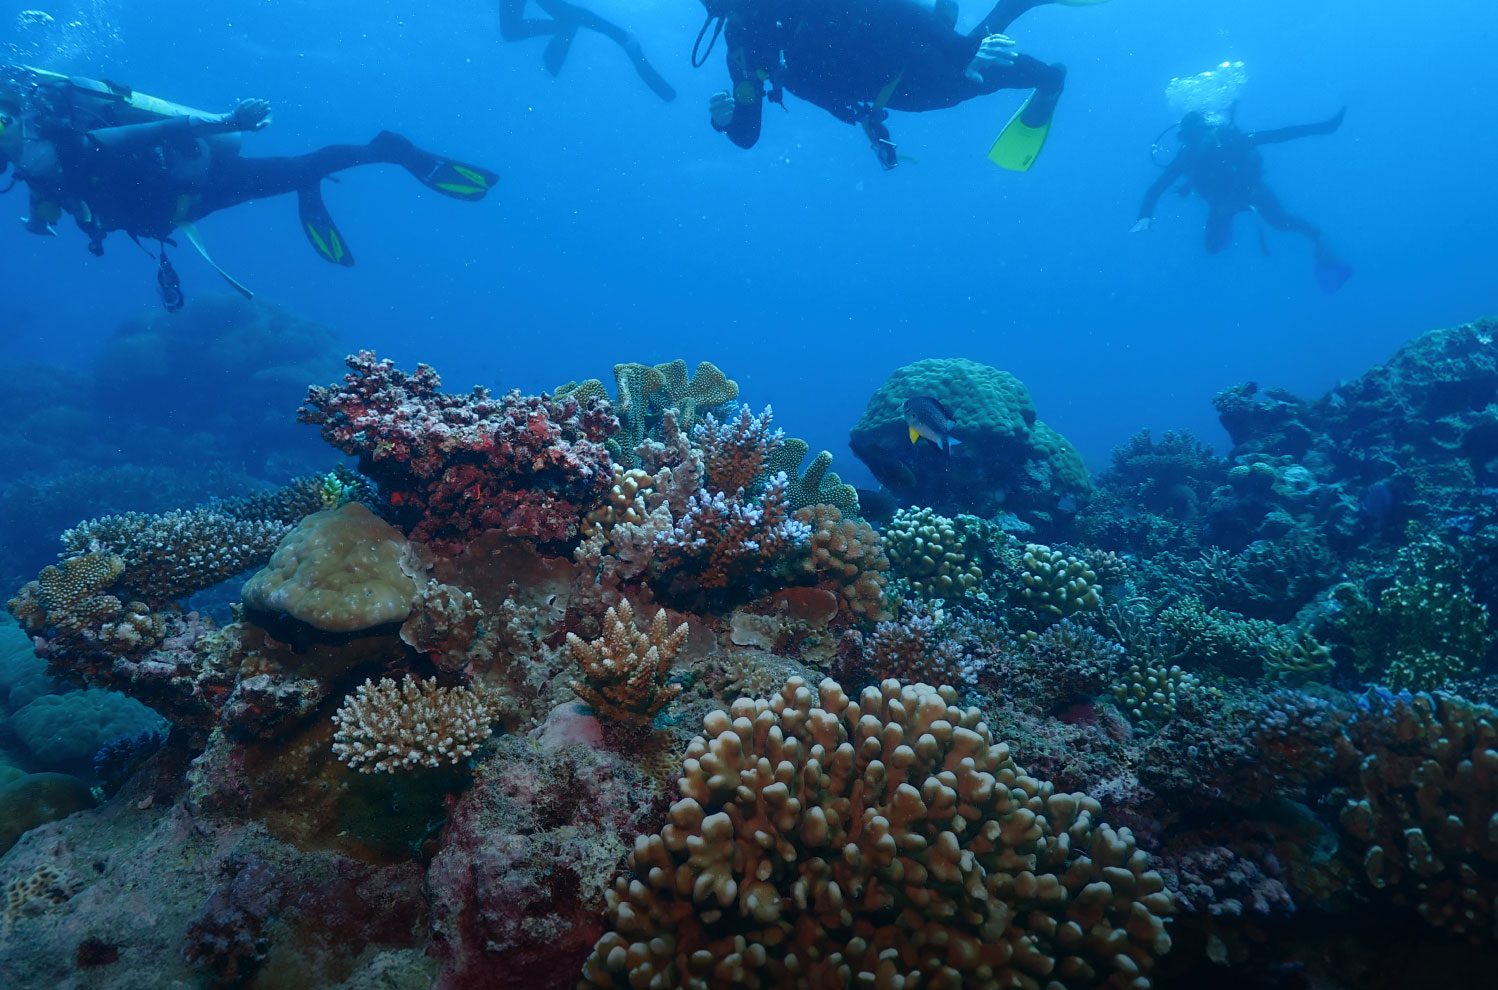 Scuba divers swim under royal blue water near prickly coral reefs below.